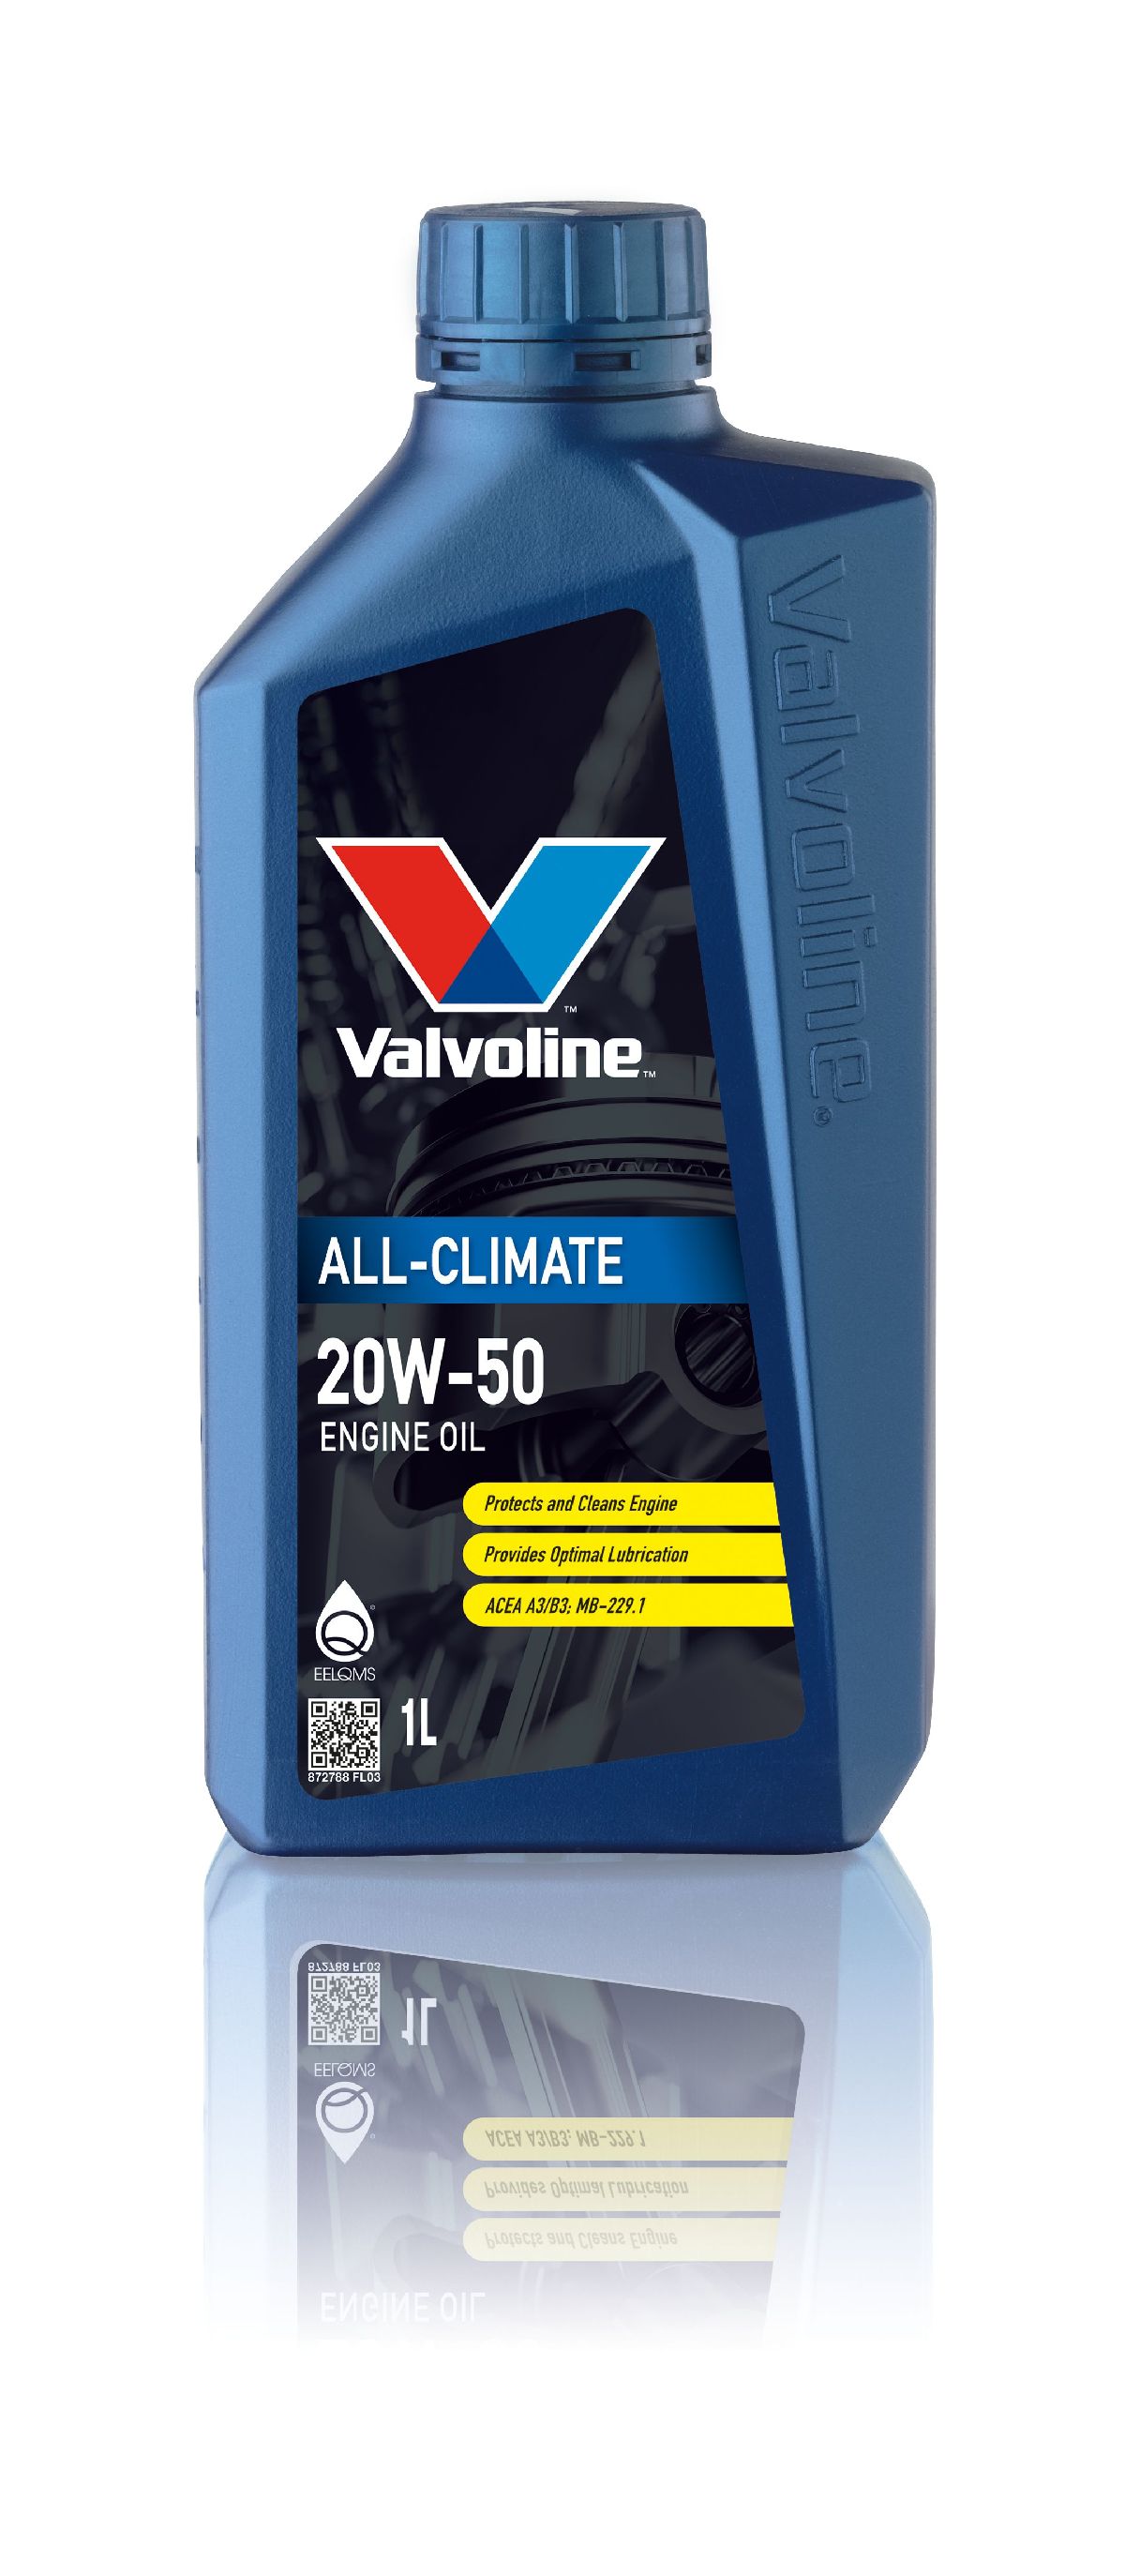 Valvoline All-Climate 20W-50